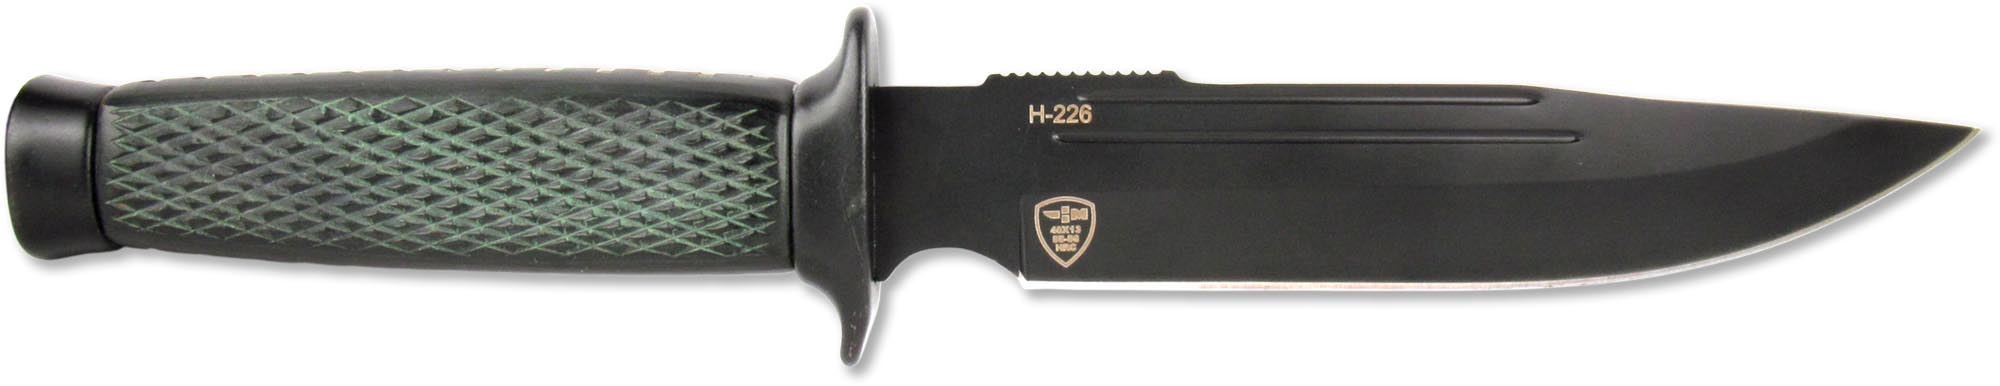 Нож туристический H-226